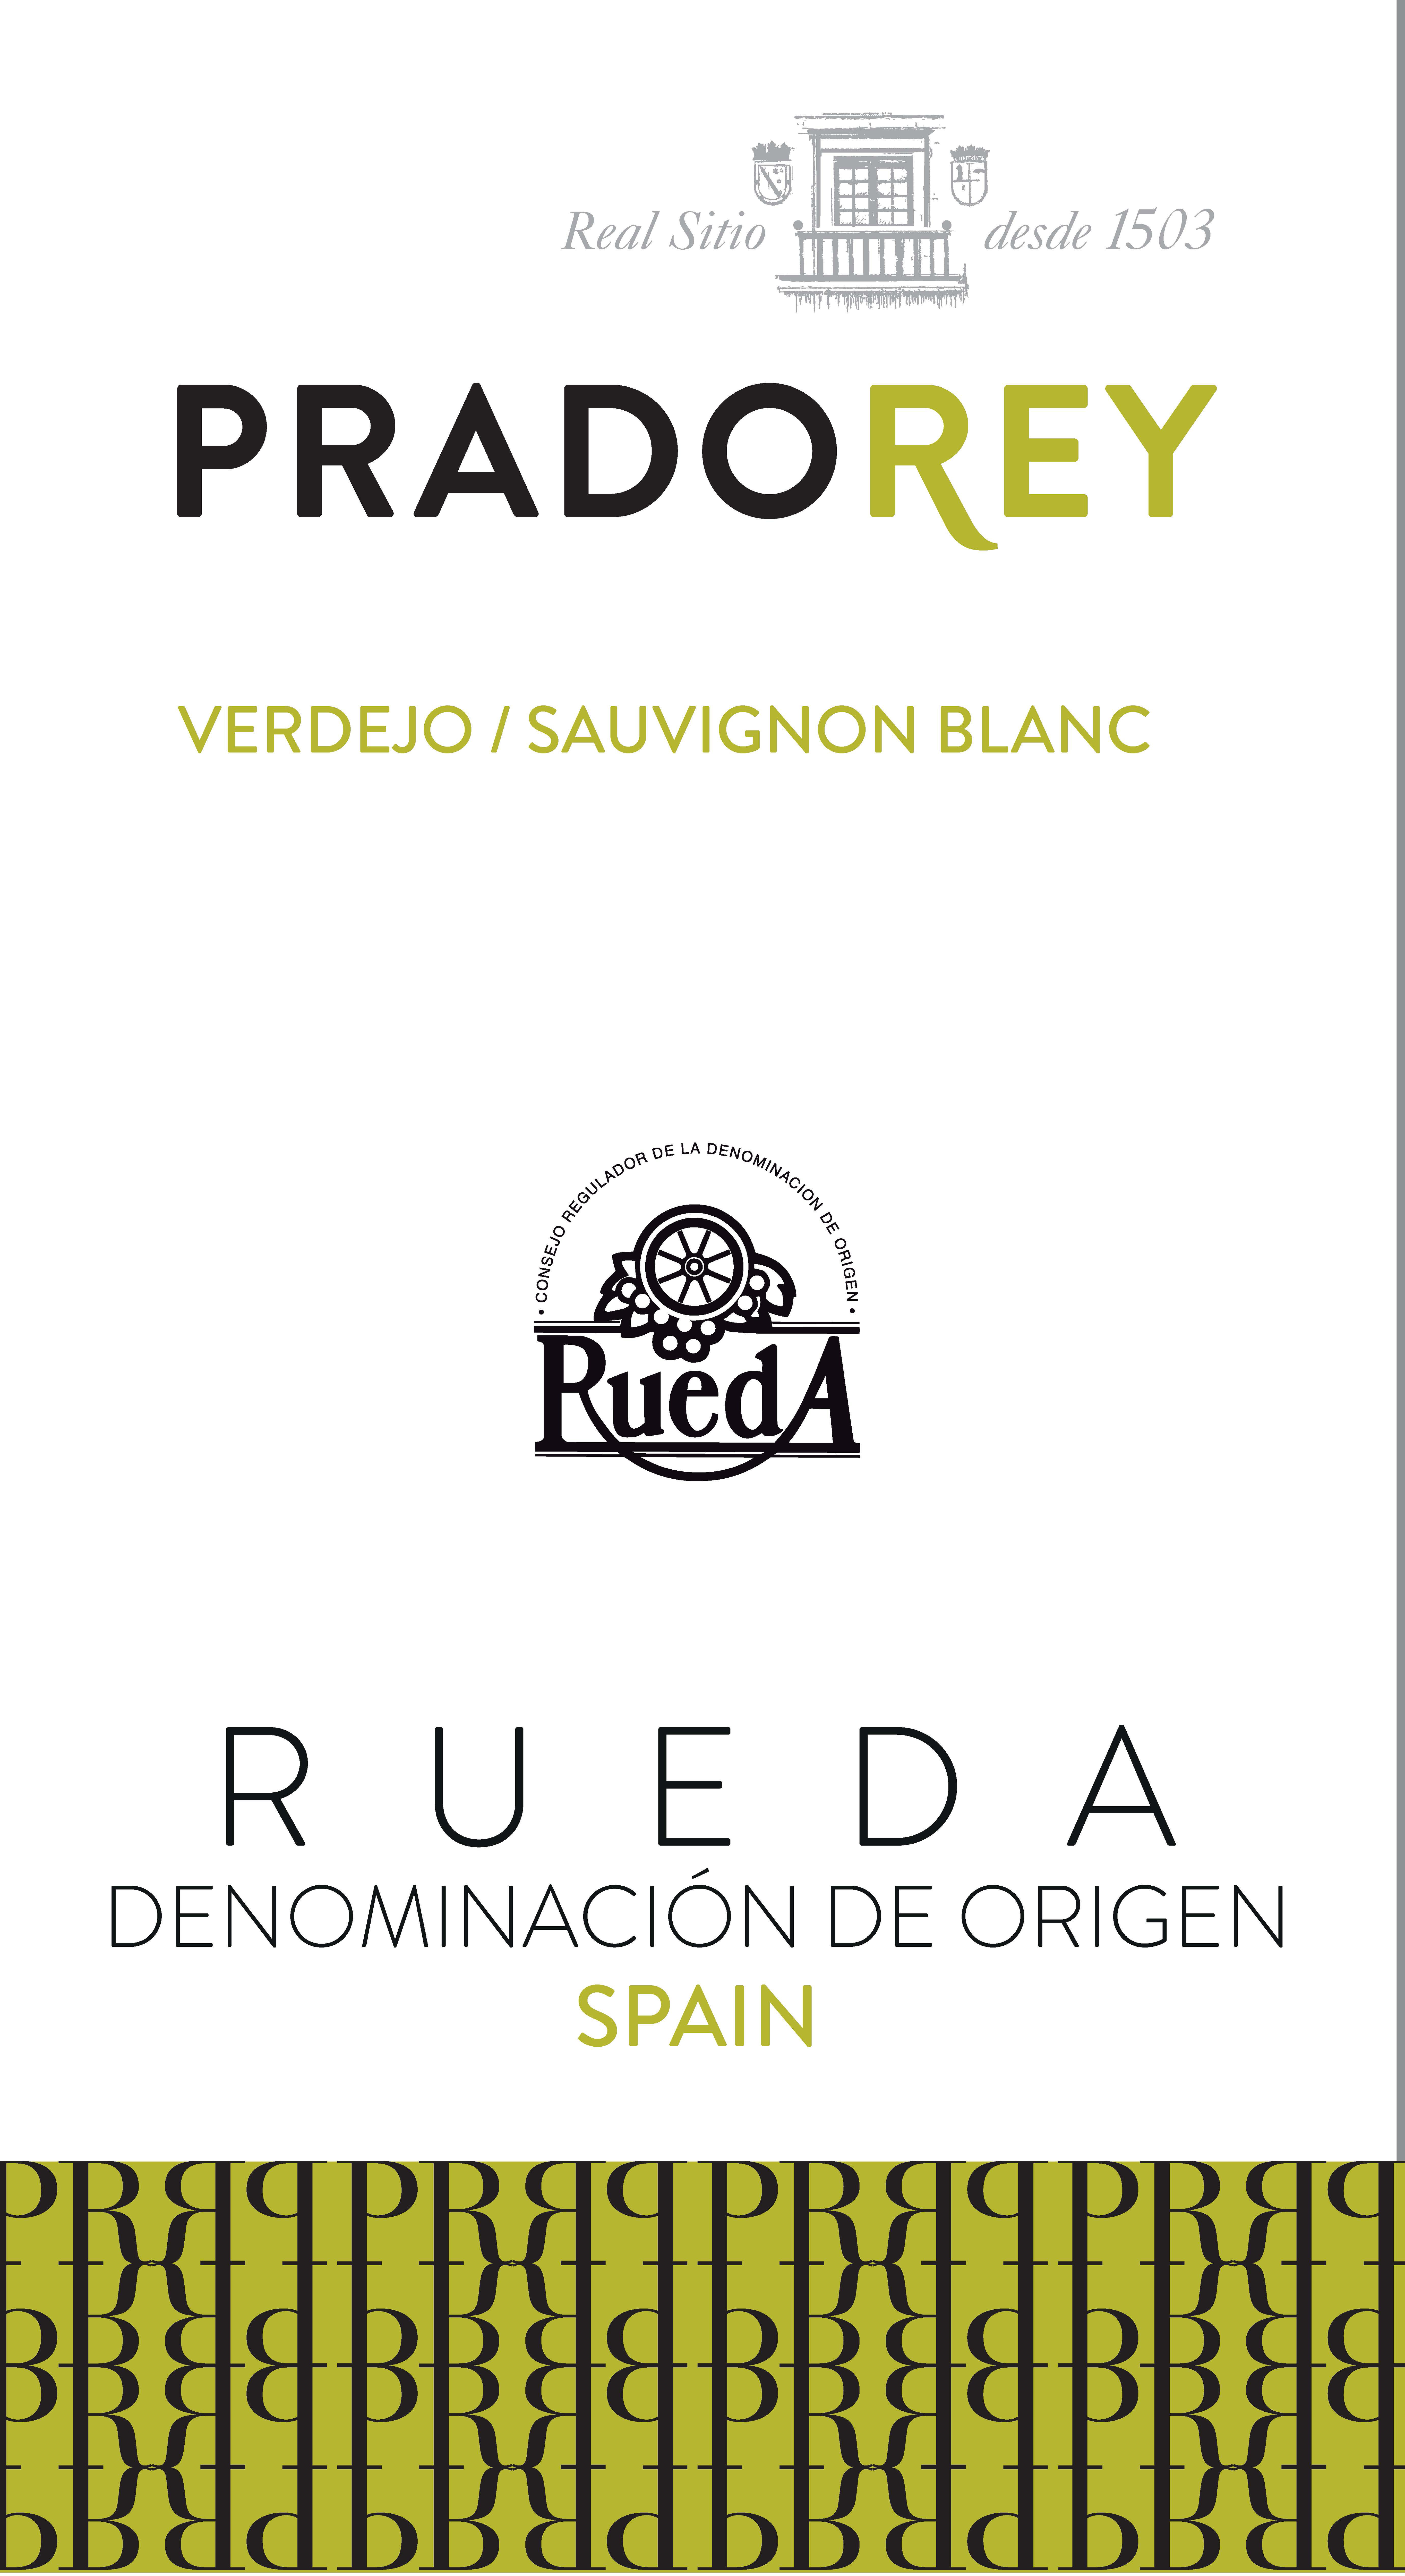 Prado Rey - Verdejo - Sauvignon Blanc label